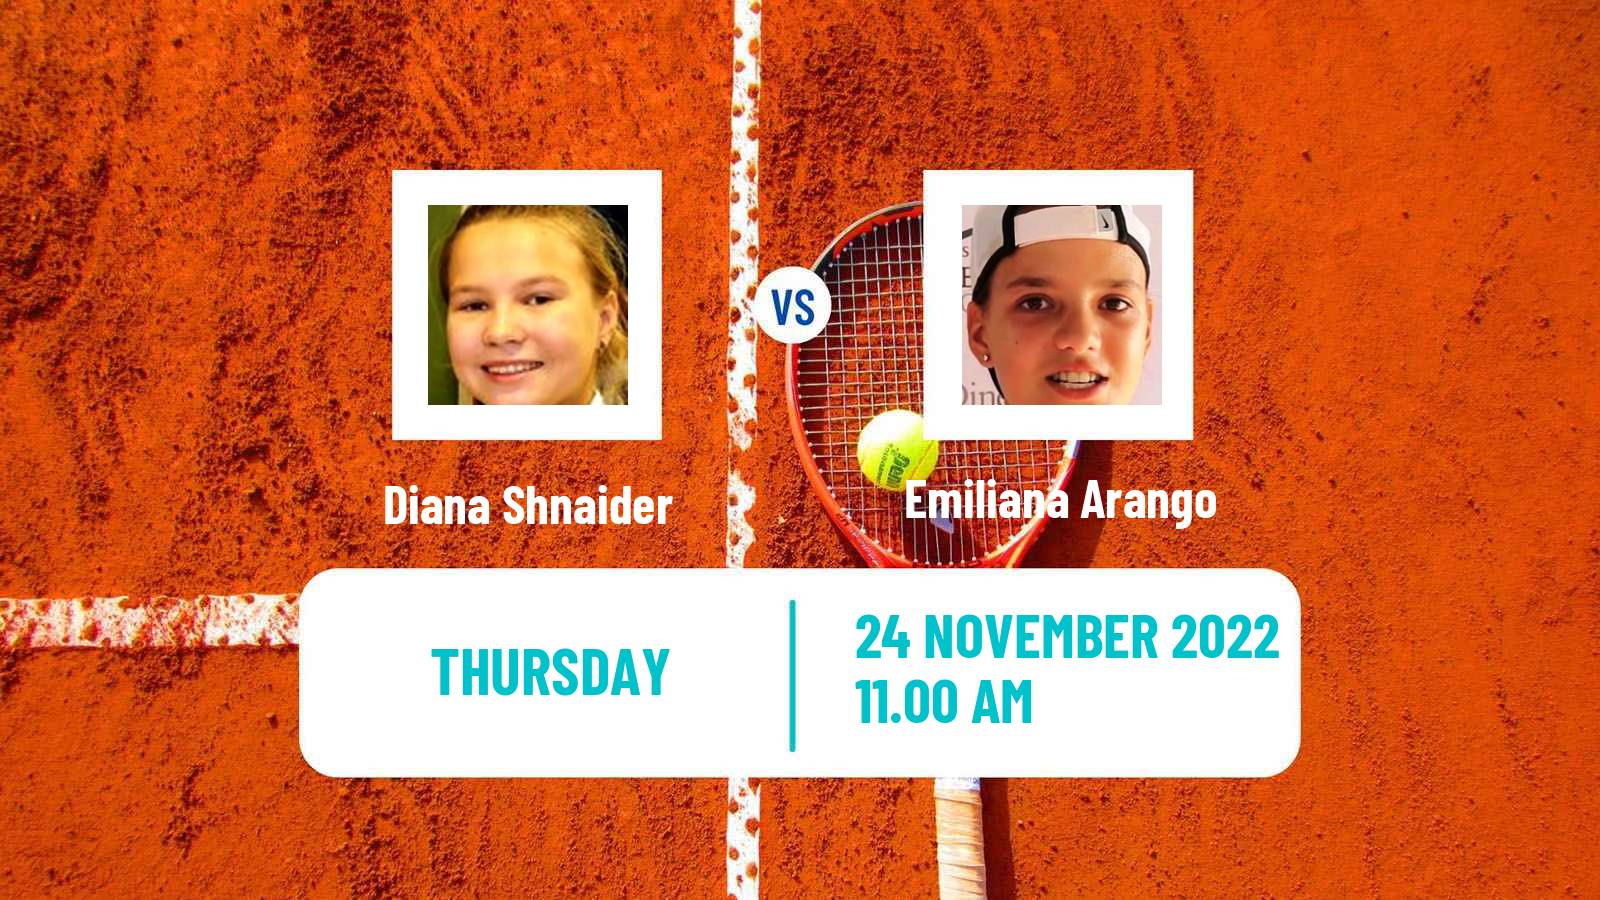 Tennis ATP Challenger Diana Shnaider - Emiliana Arango